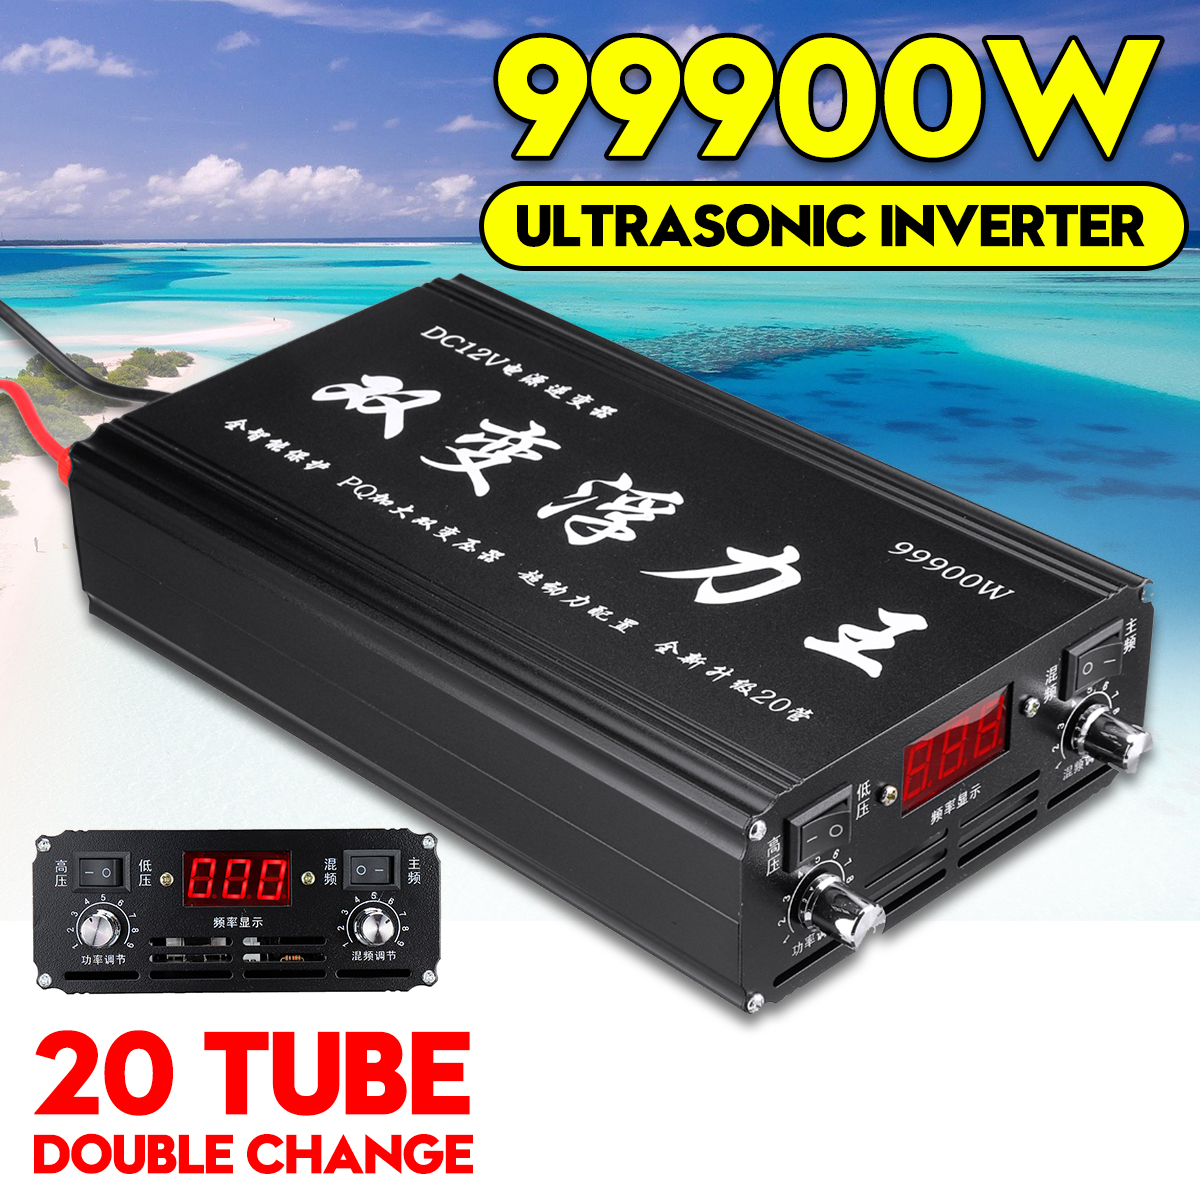 99900W-12V-Smart-Ultrasonic-Inverter-Electro-Fisher-Fishing-Machine-Ultrasonic-Inverter-Safe-Protect-1646551-1